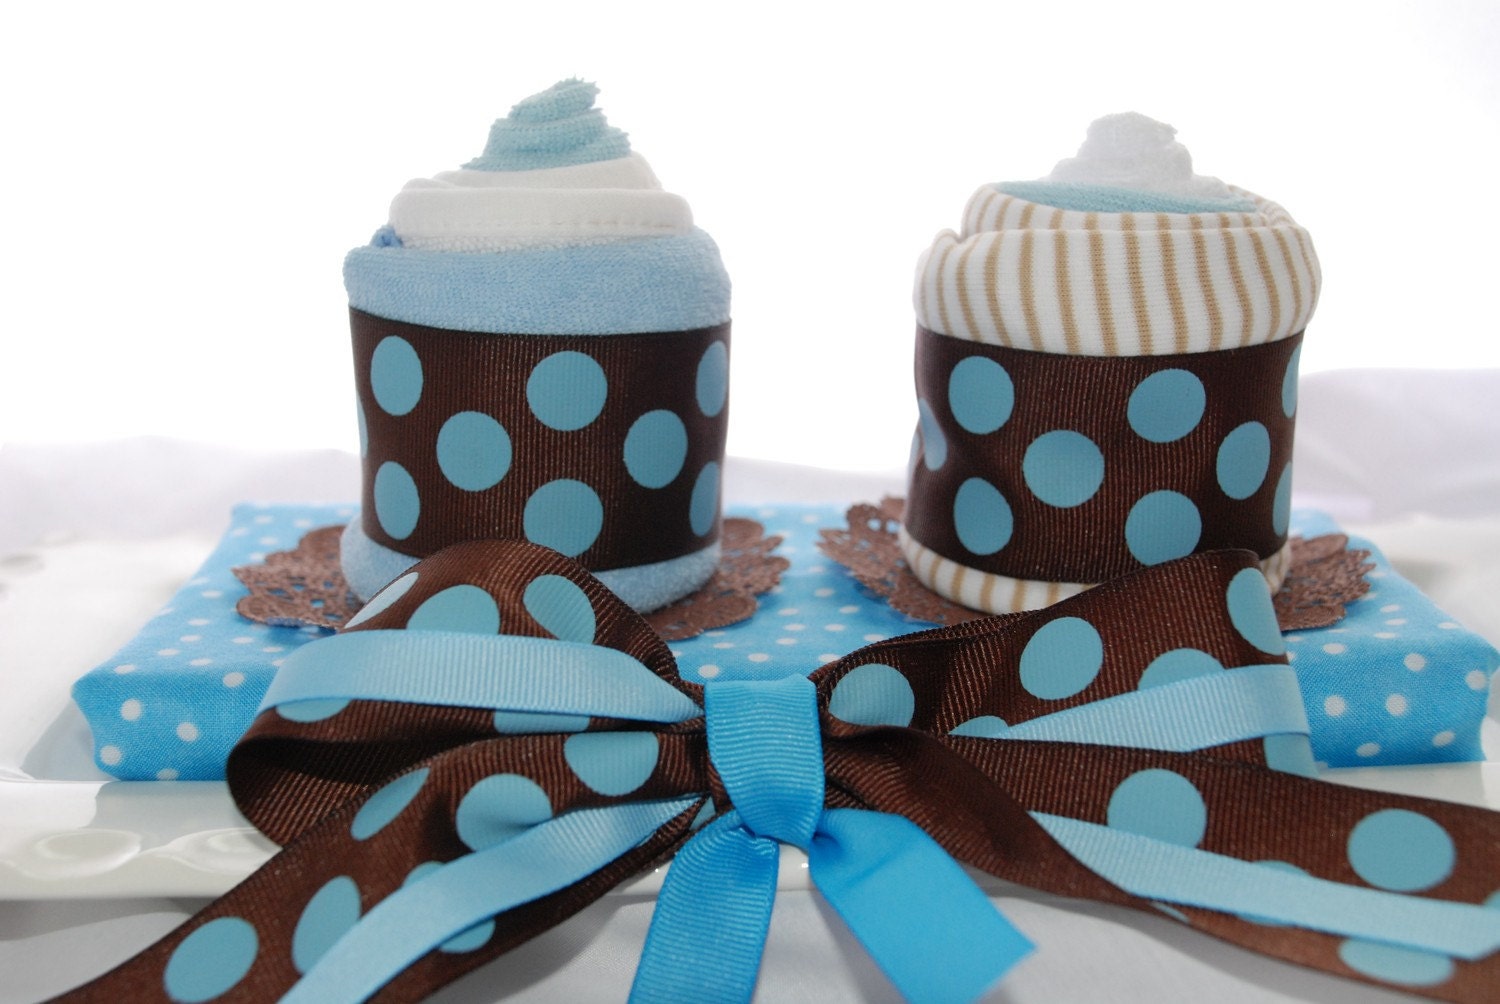 Cupcake Onesie Gift Set The Riley   baby shower   ایده برای تزیین سیسمونی  نوزاد و فرشته كوچولو جشن سیسمونی یا